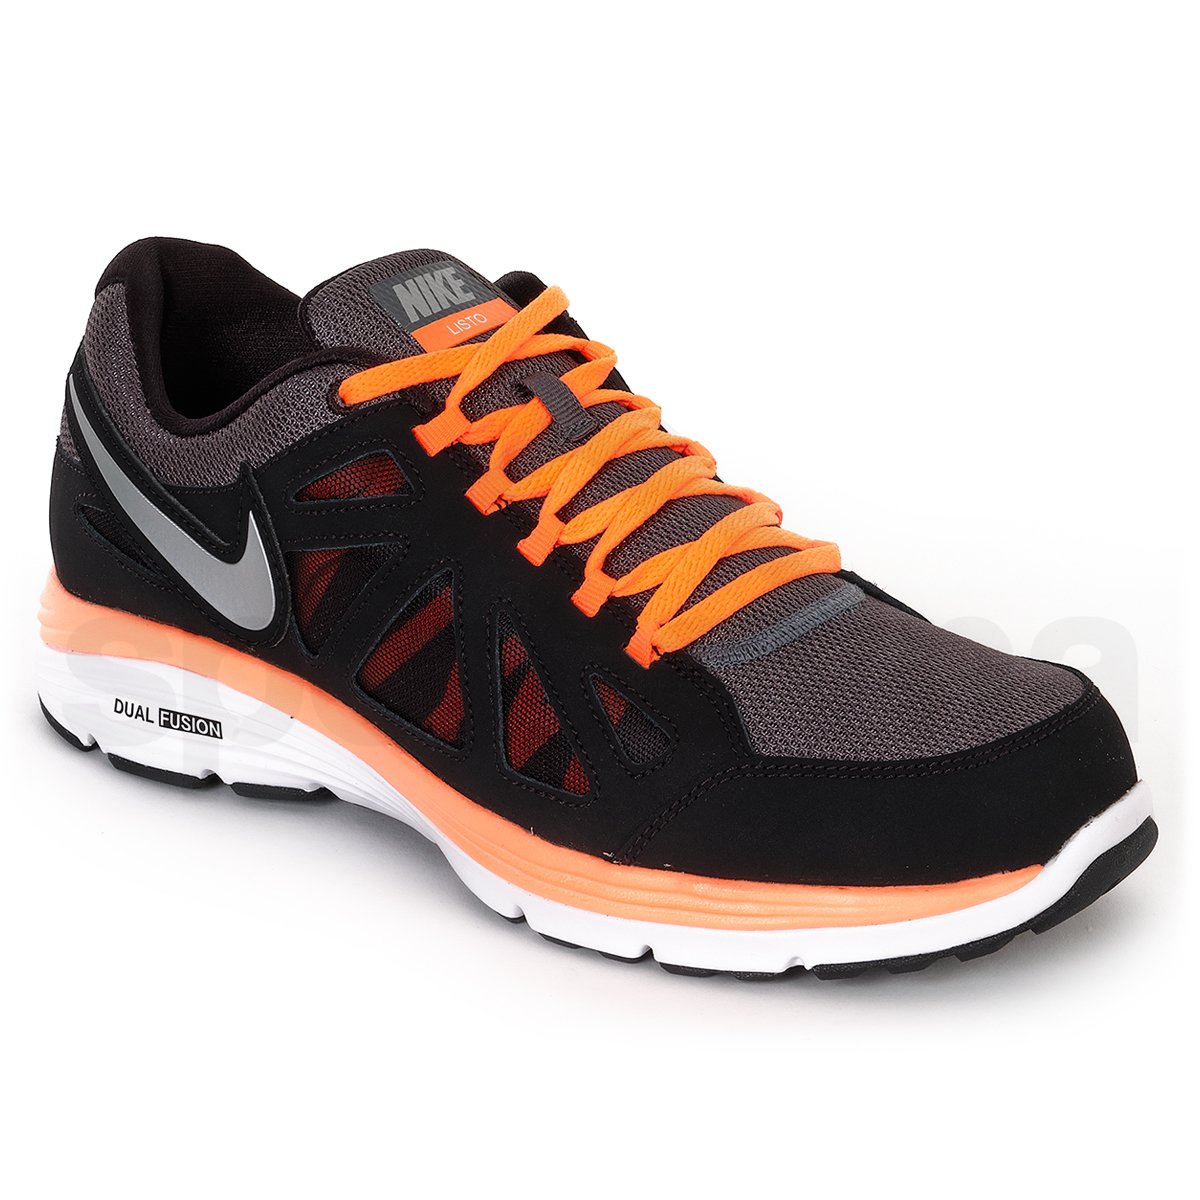 Běžecká obuv Nike Listo M - černá/oranžová/bílá